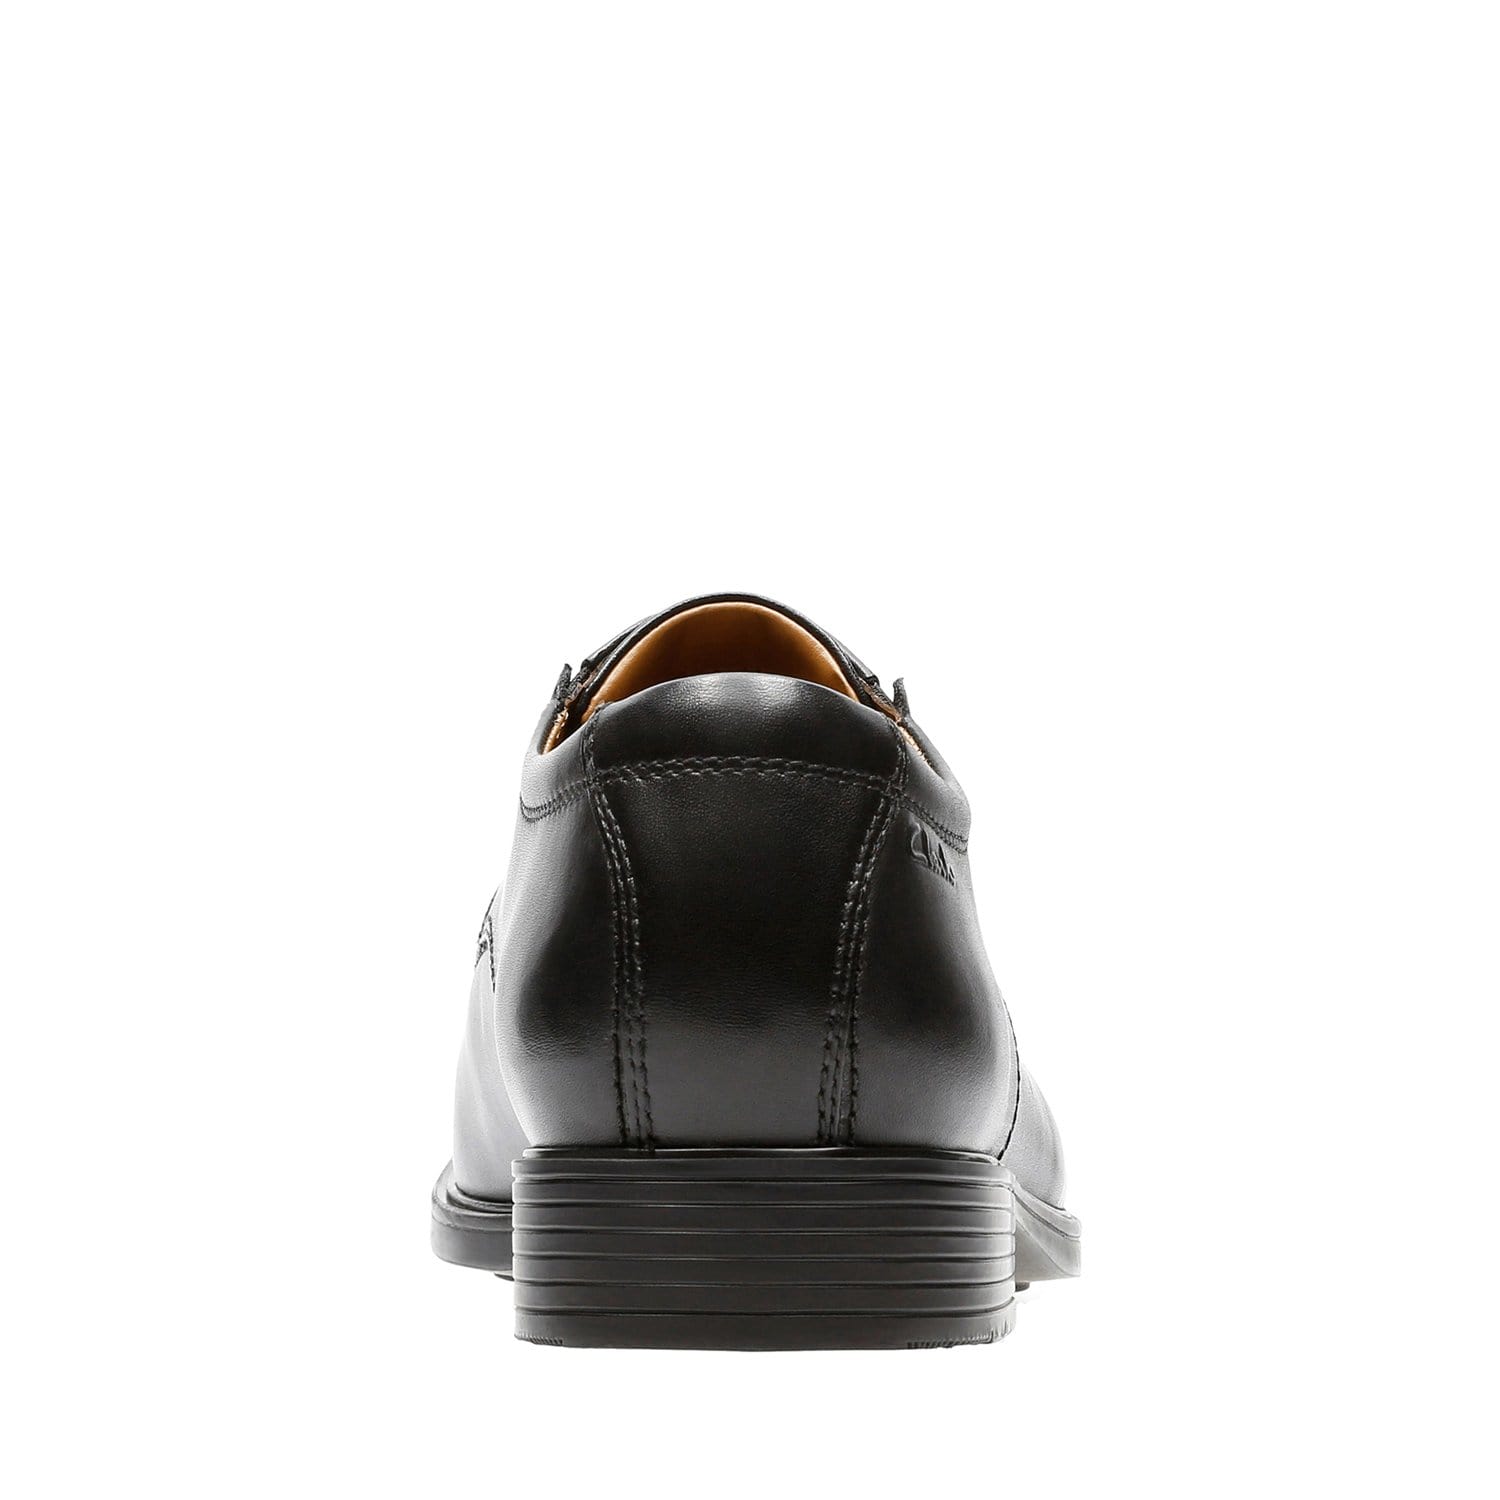 clarks-tilden-plain-shoes-black-leather-26110350-h-width-wide-fit